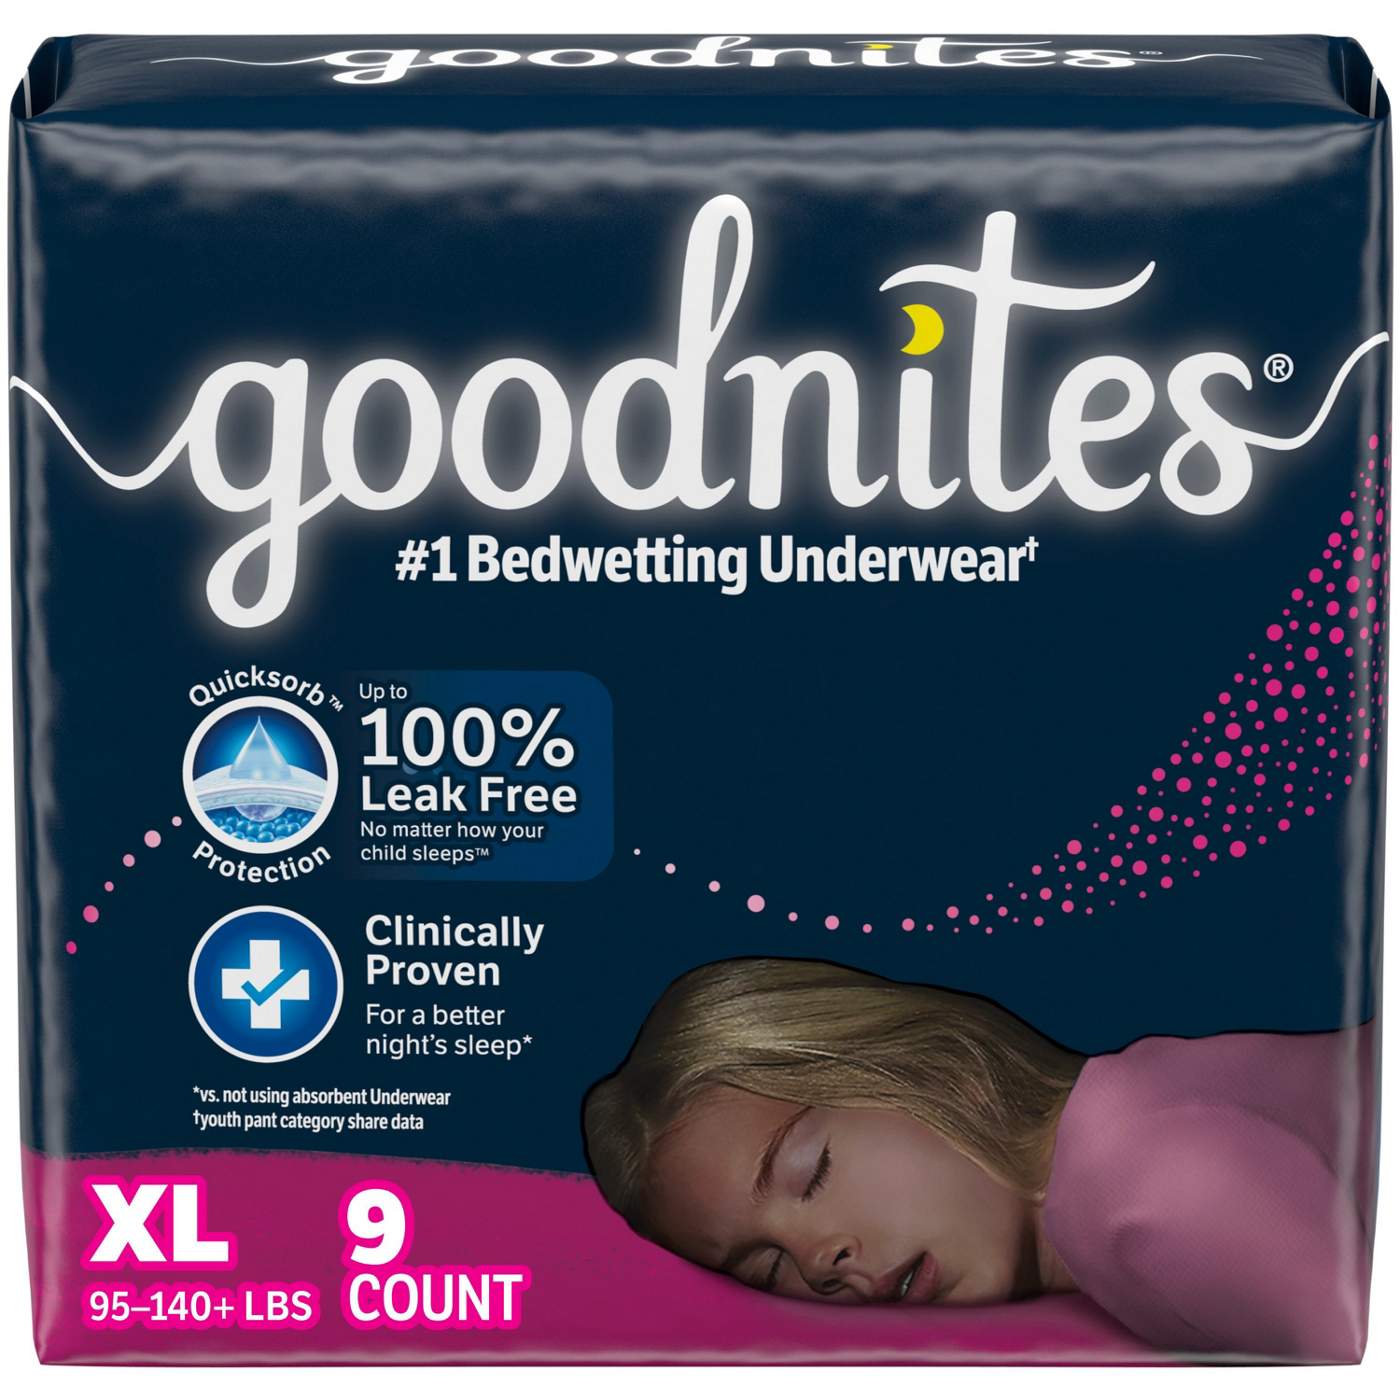 GoodNites Nighttime Underwear Girls Disney Princess S/M (43-68 lbs) - 14 ct  pkg